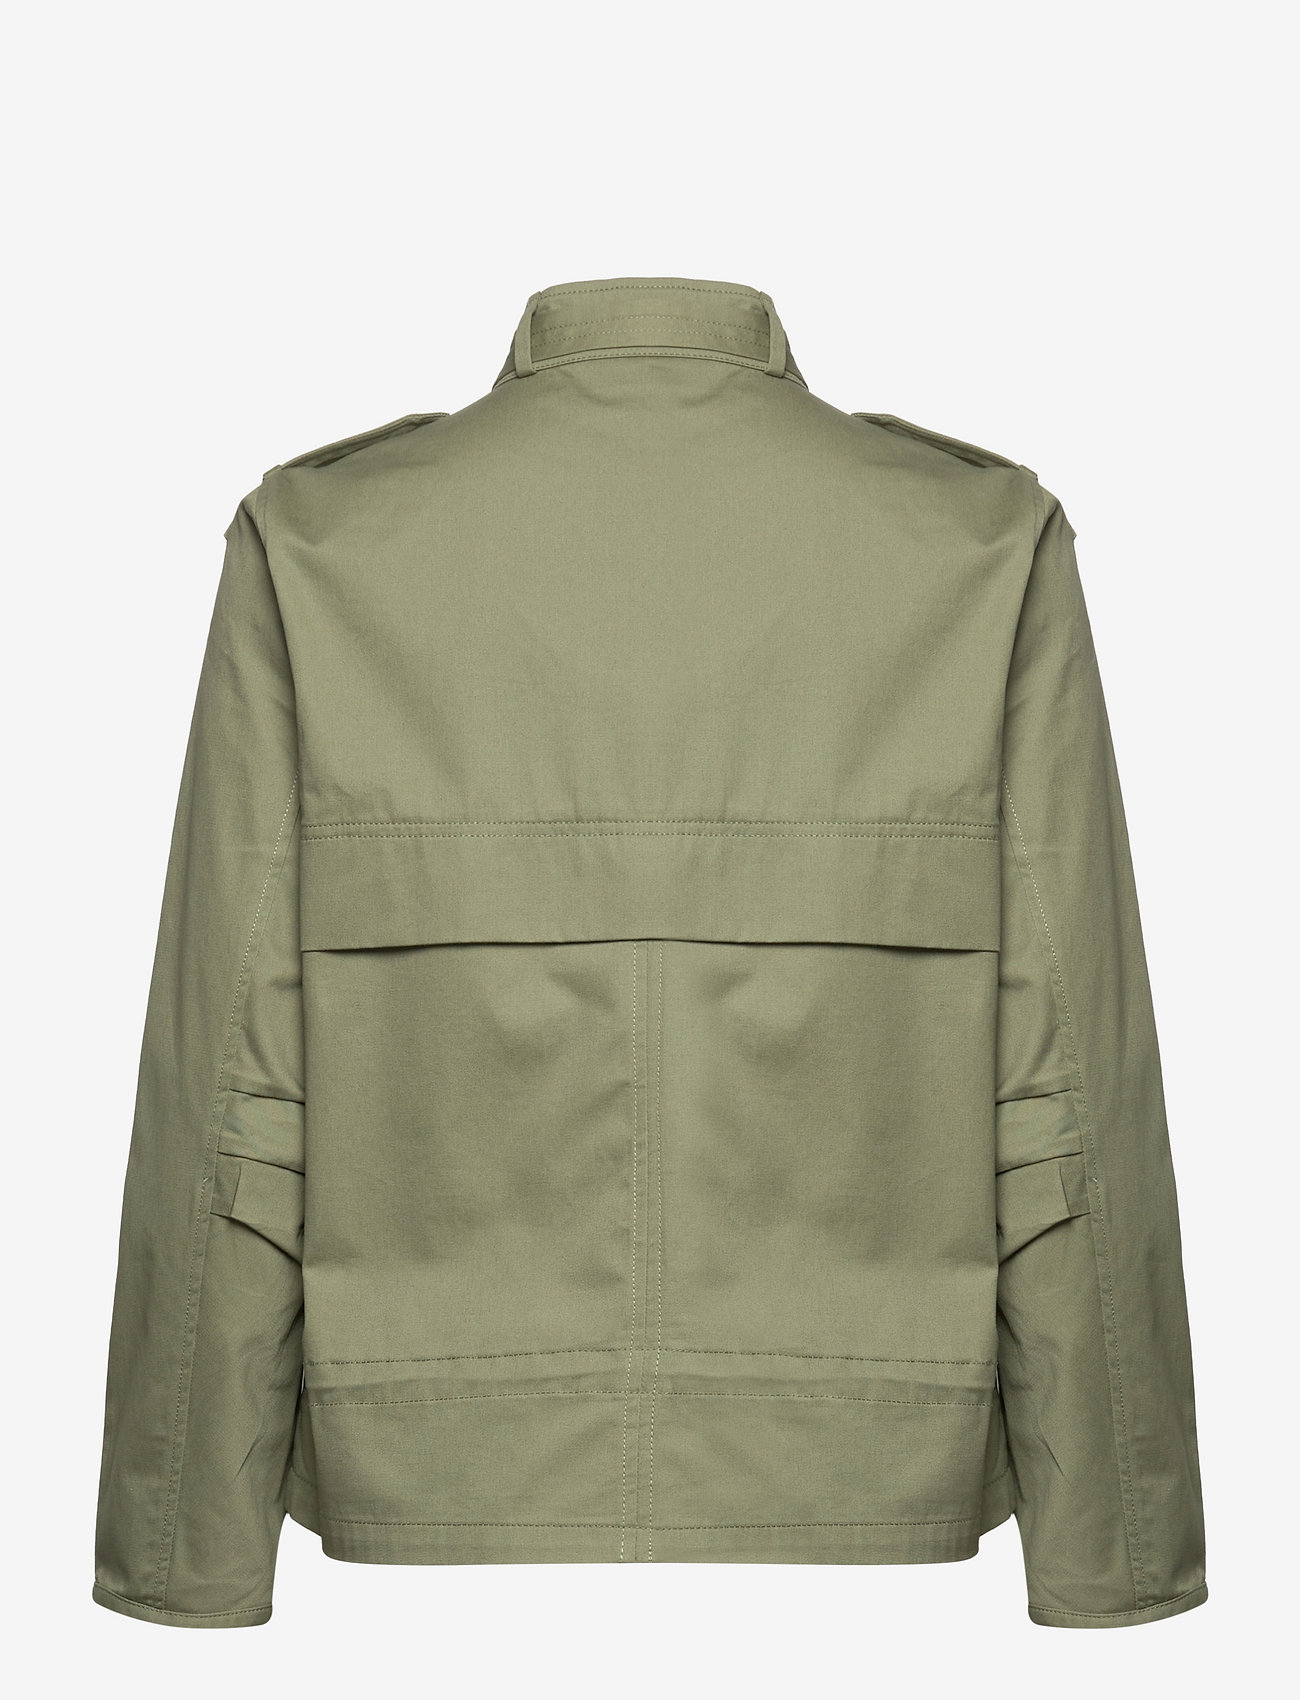 Esprit Casual - Outdoor jacket - darba stila jakas - light khaki - 1